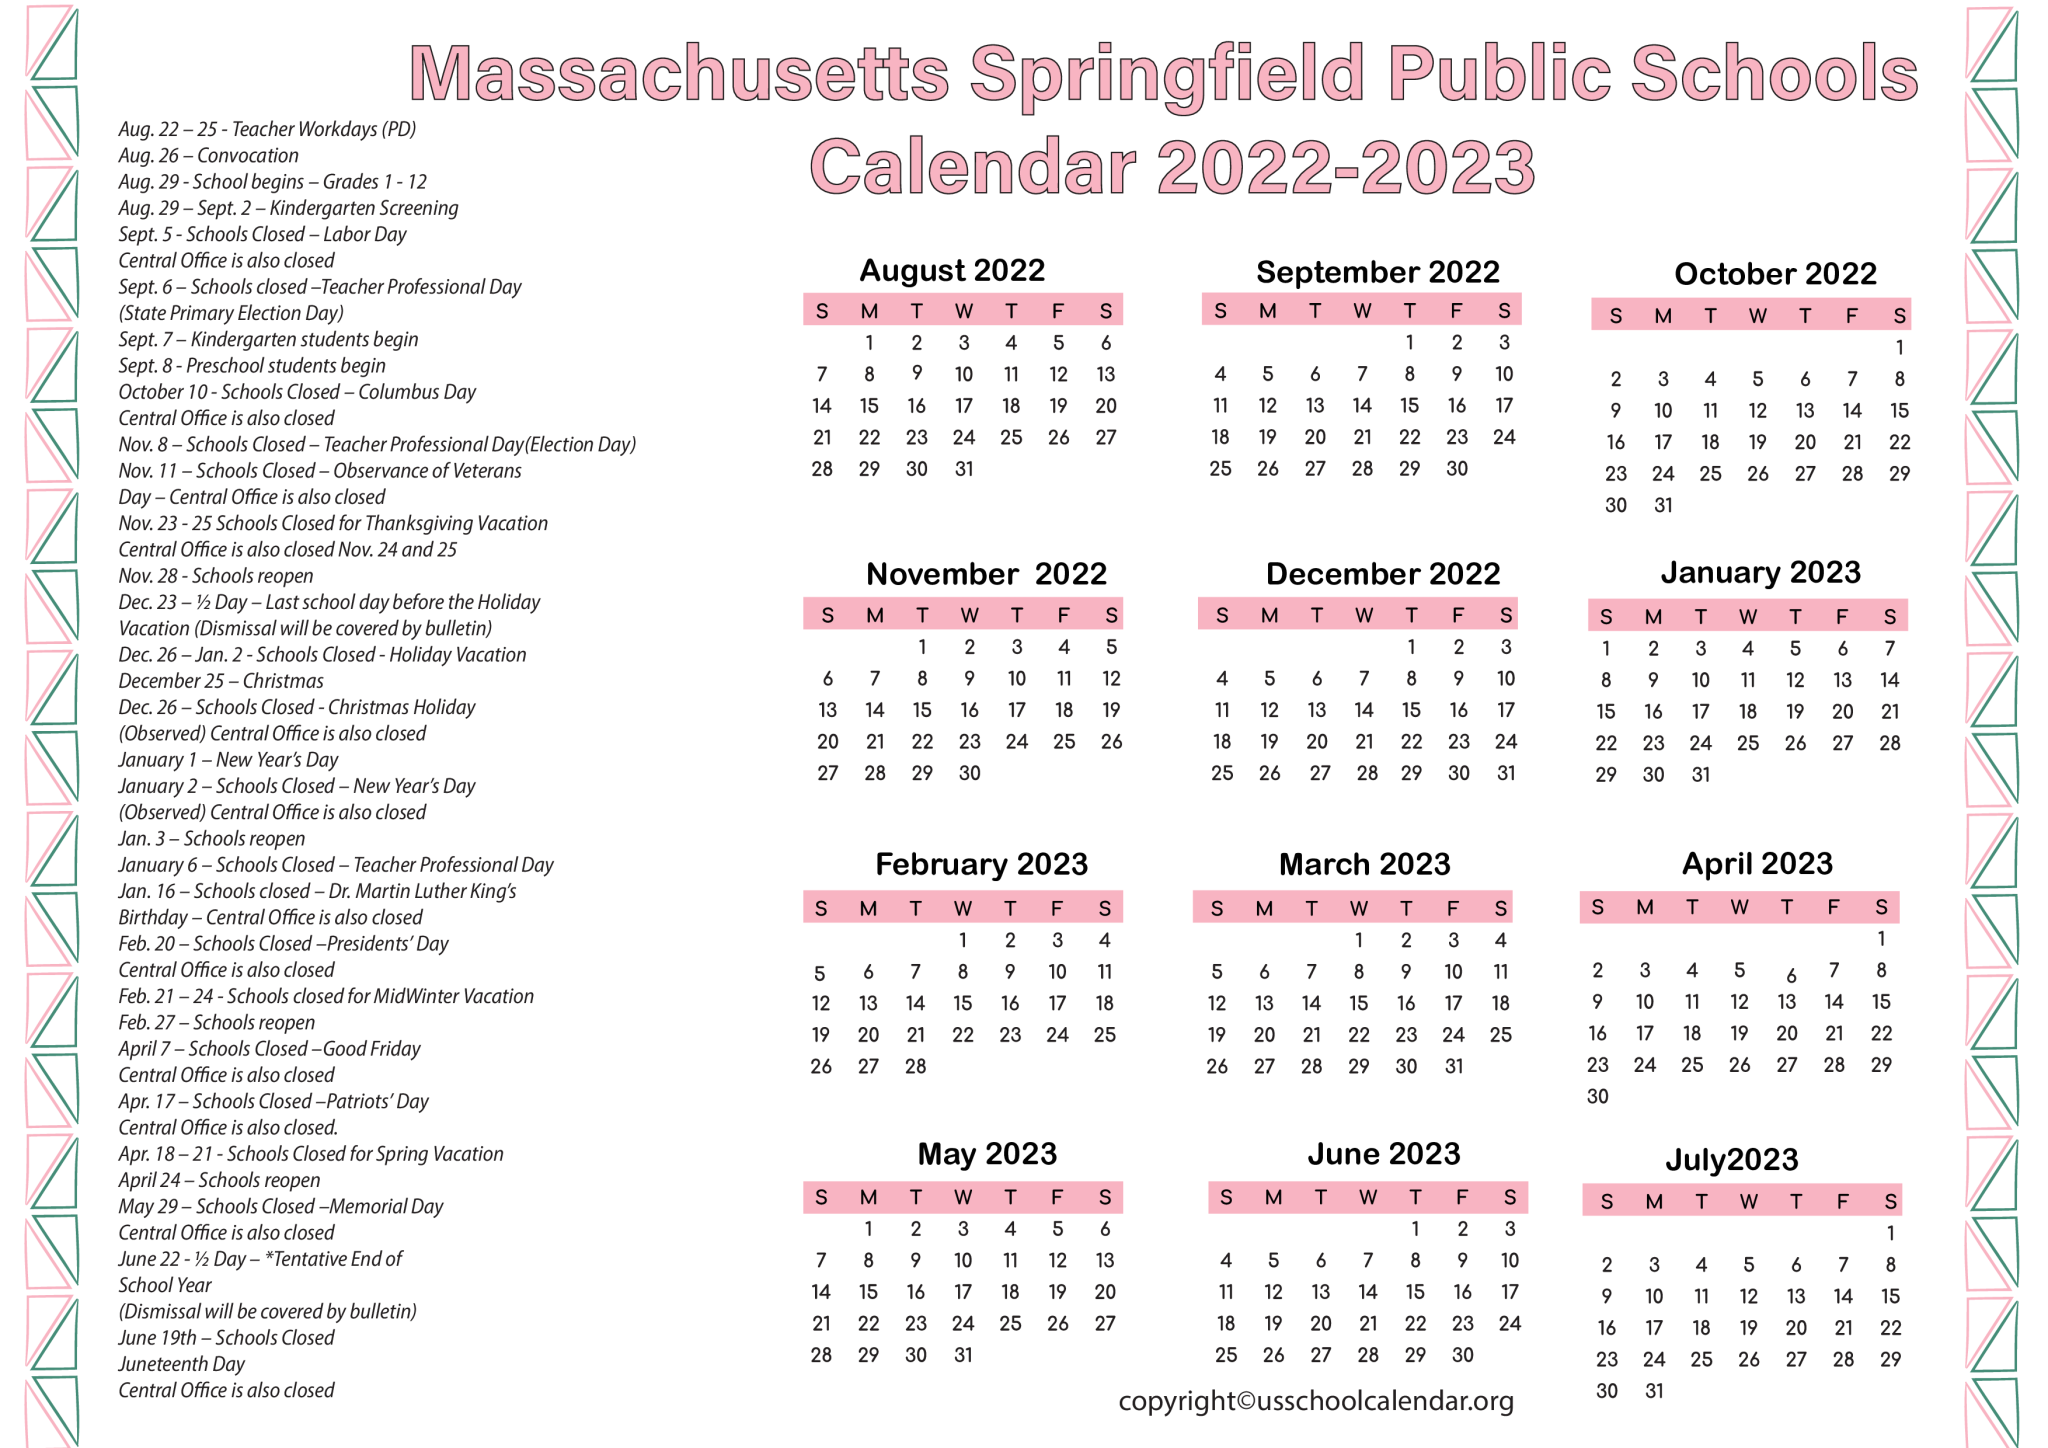 Massachusetts Springfield Public Schools Calendar 2023